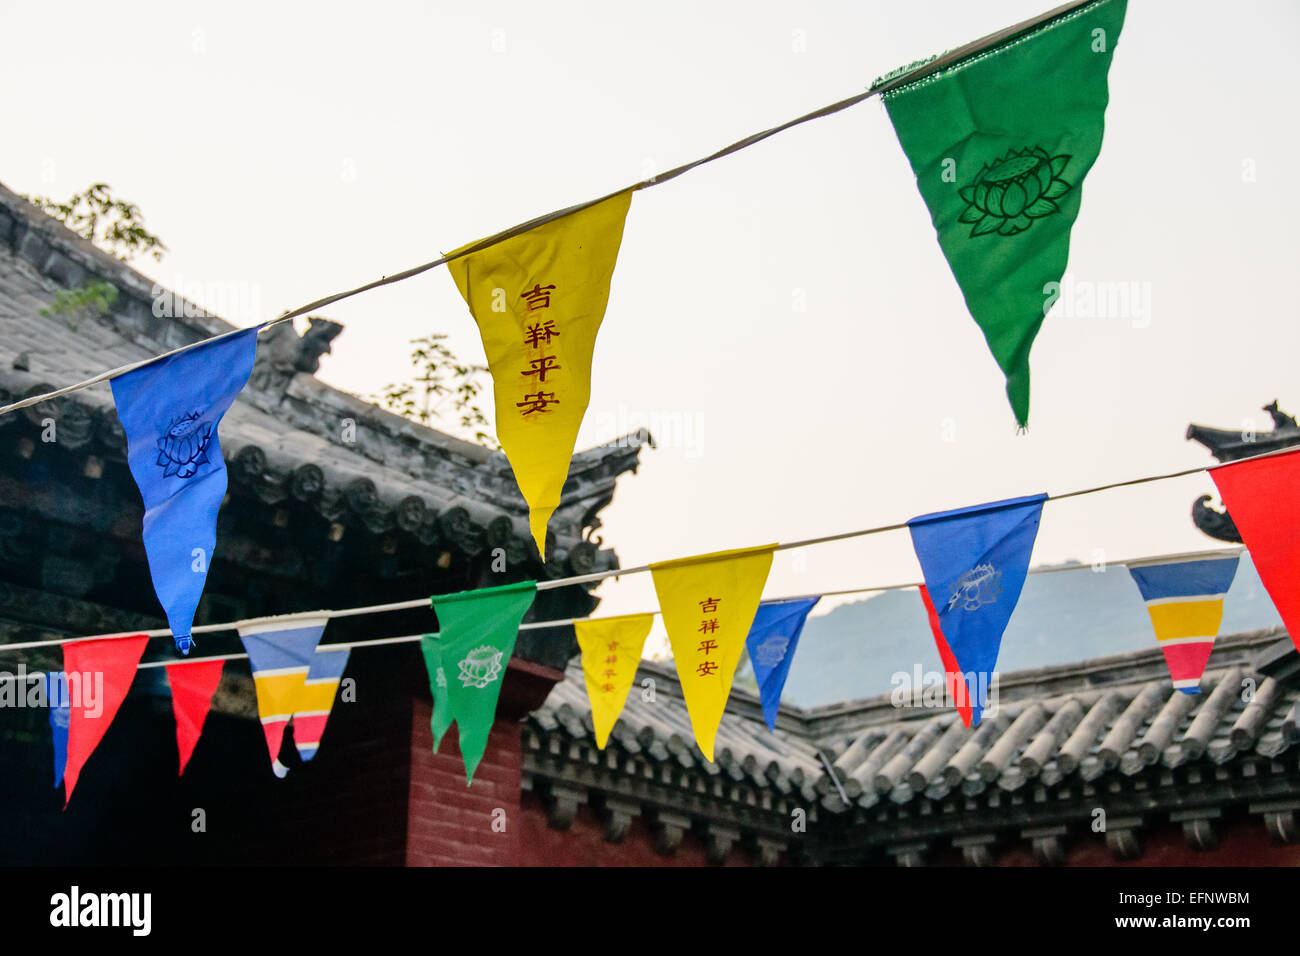 Pennant flags at the Shaolin Temple, Zhengzhou, China Stock Photo